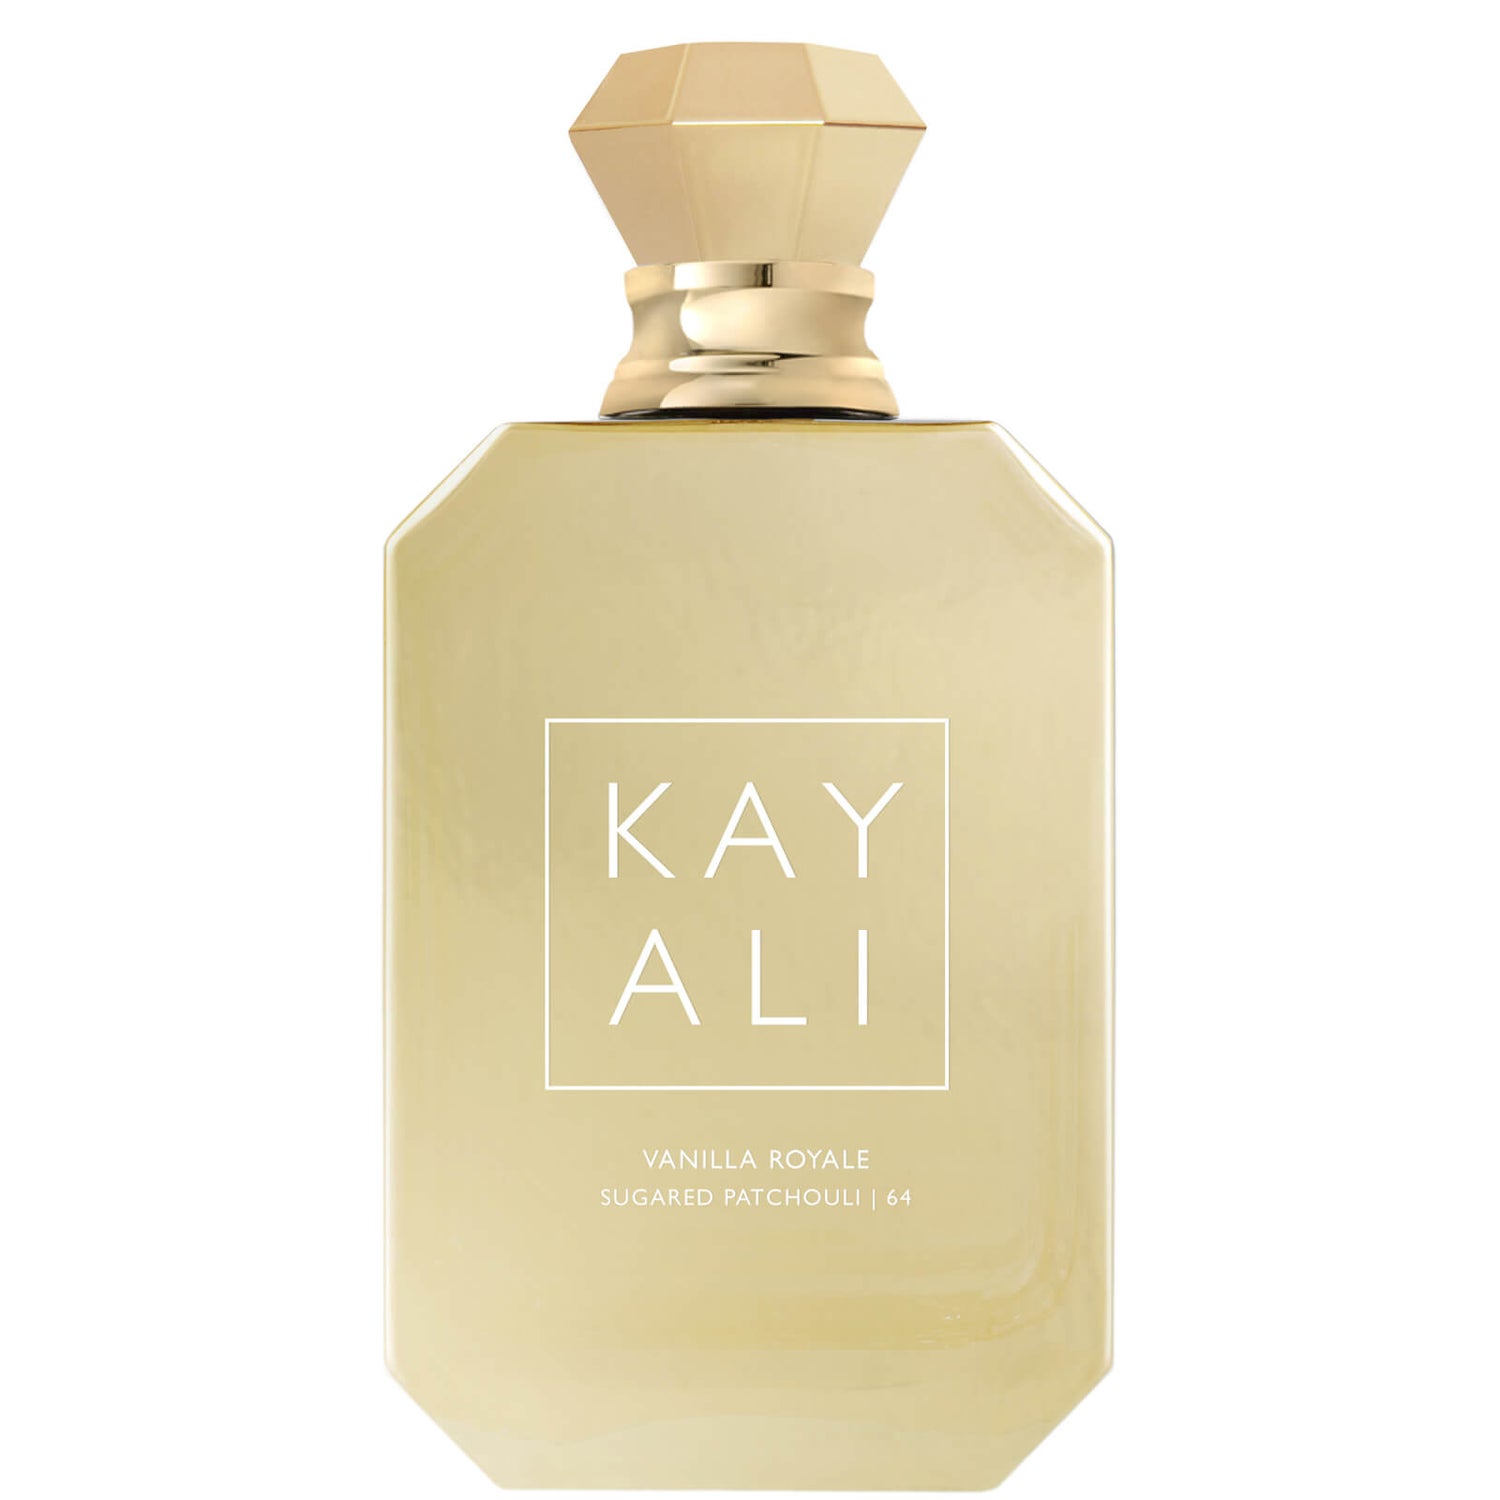 KAYALI Vanilla Royale Sugared Patchouli 64 Eau de Parfum Intense 100ml ...